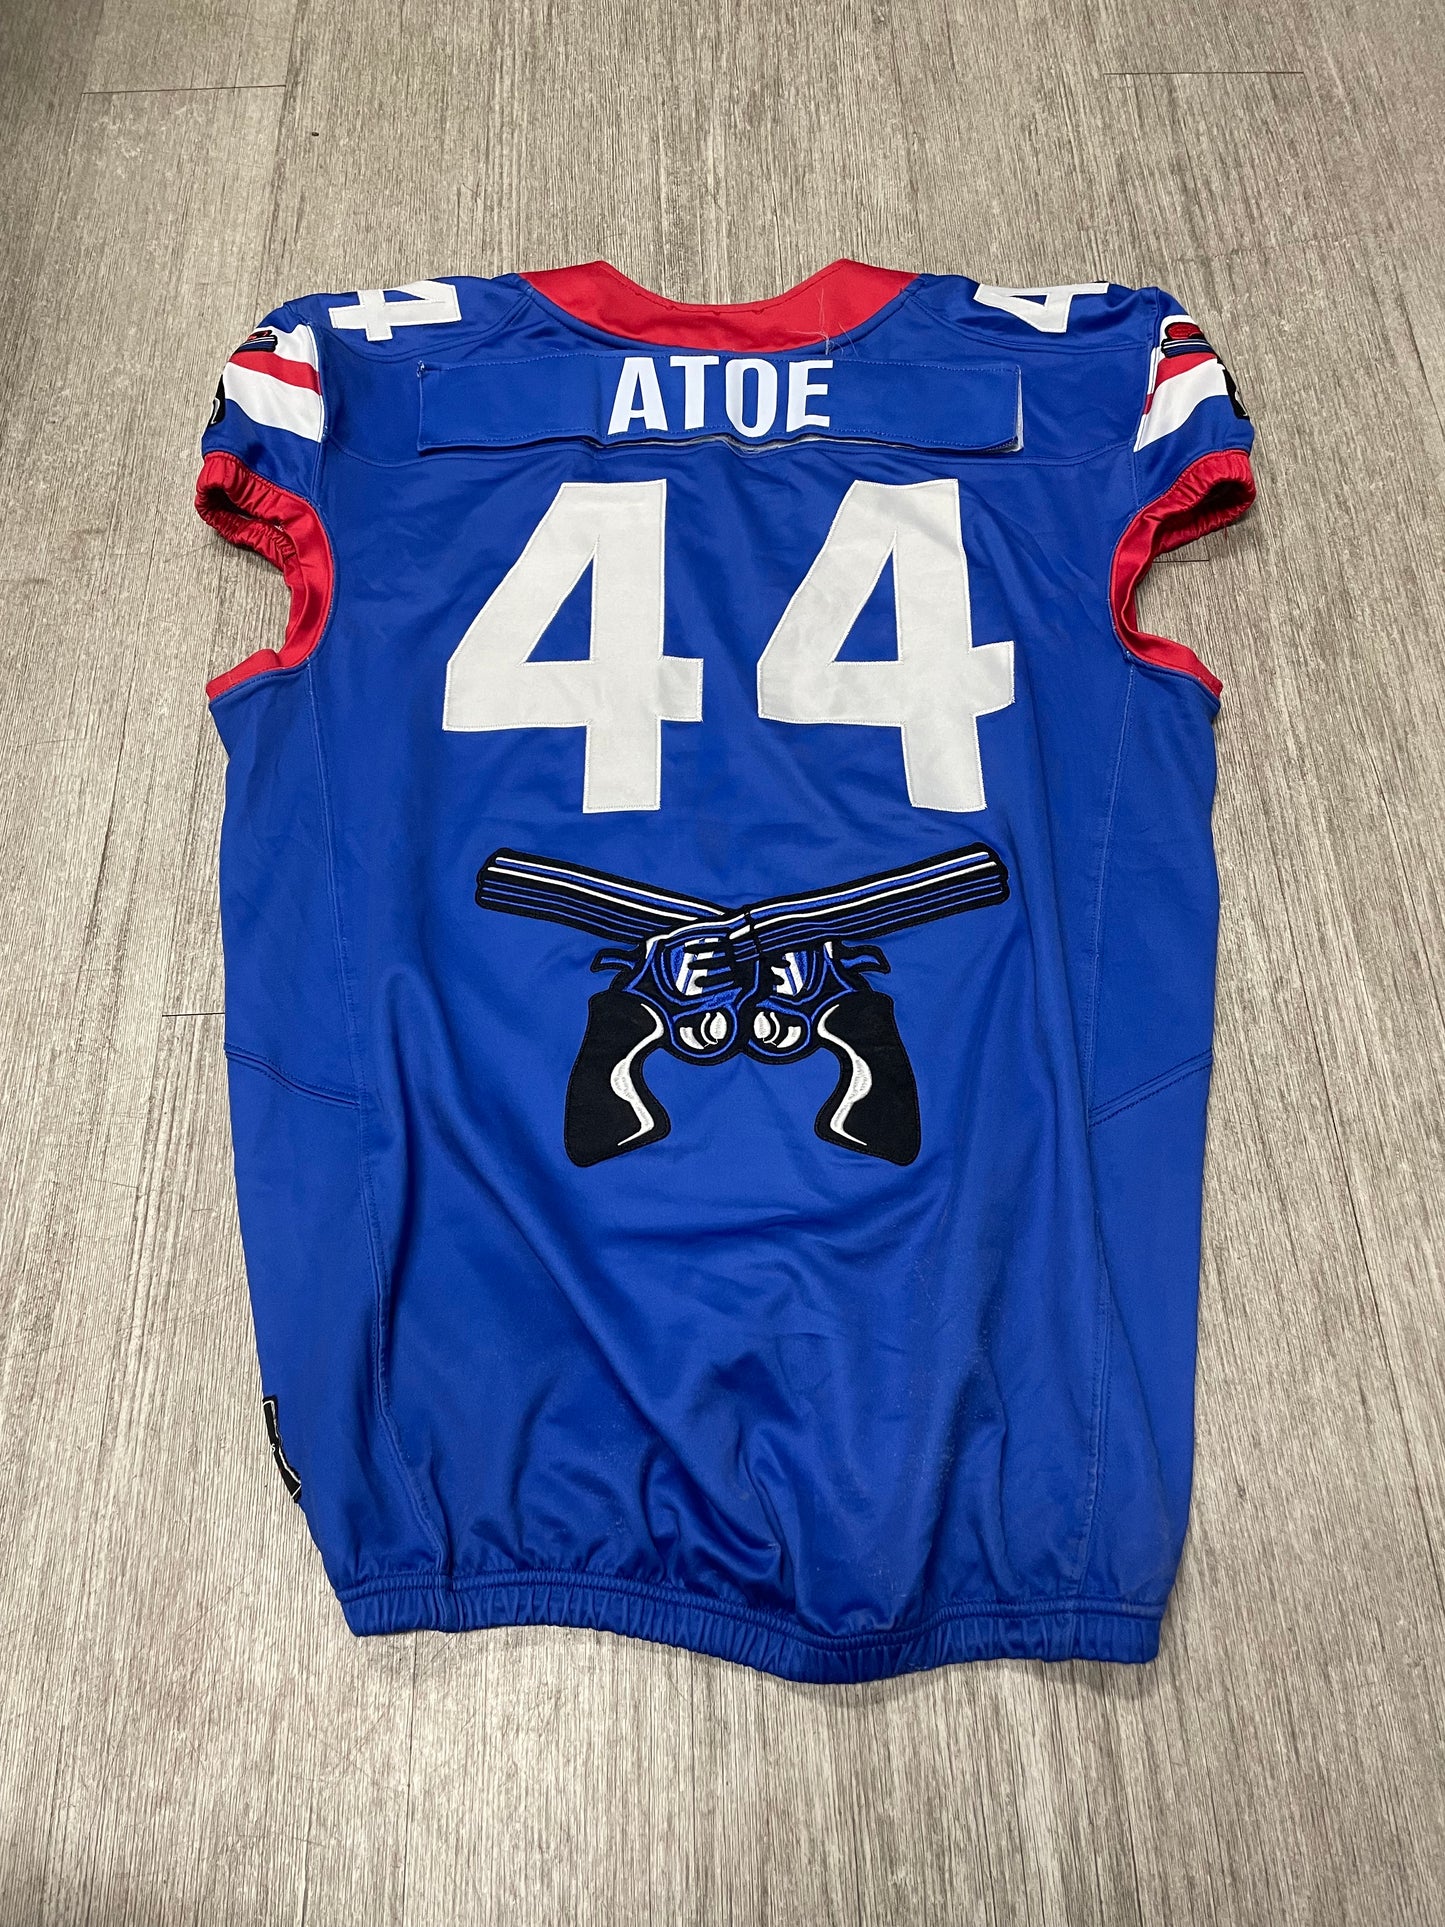 #44 James Atoe - 2023 Blue Jersey